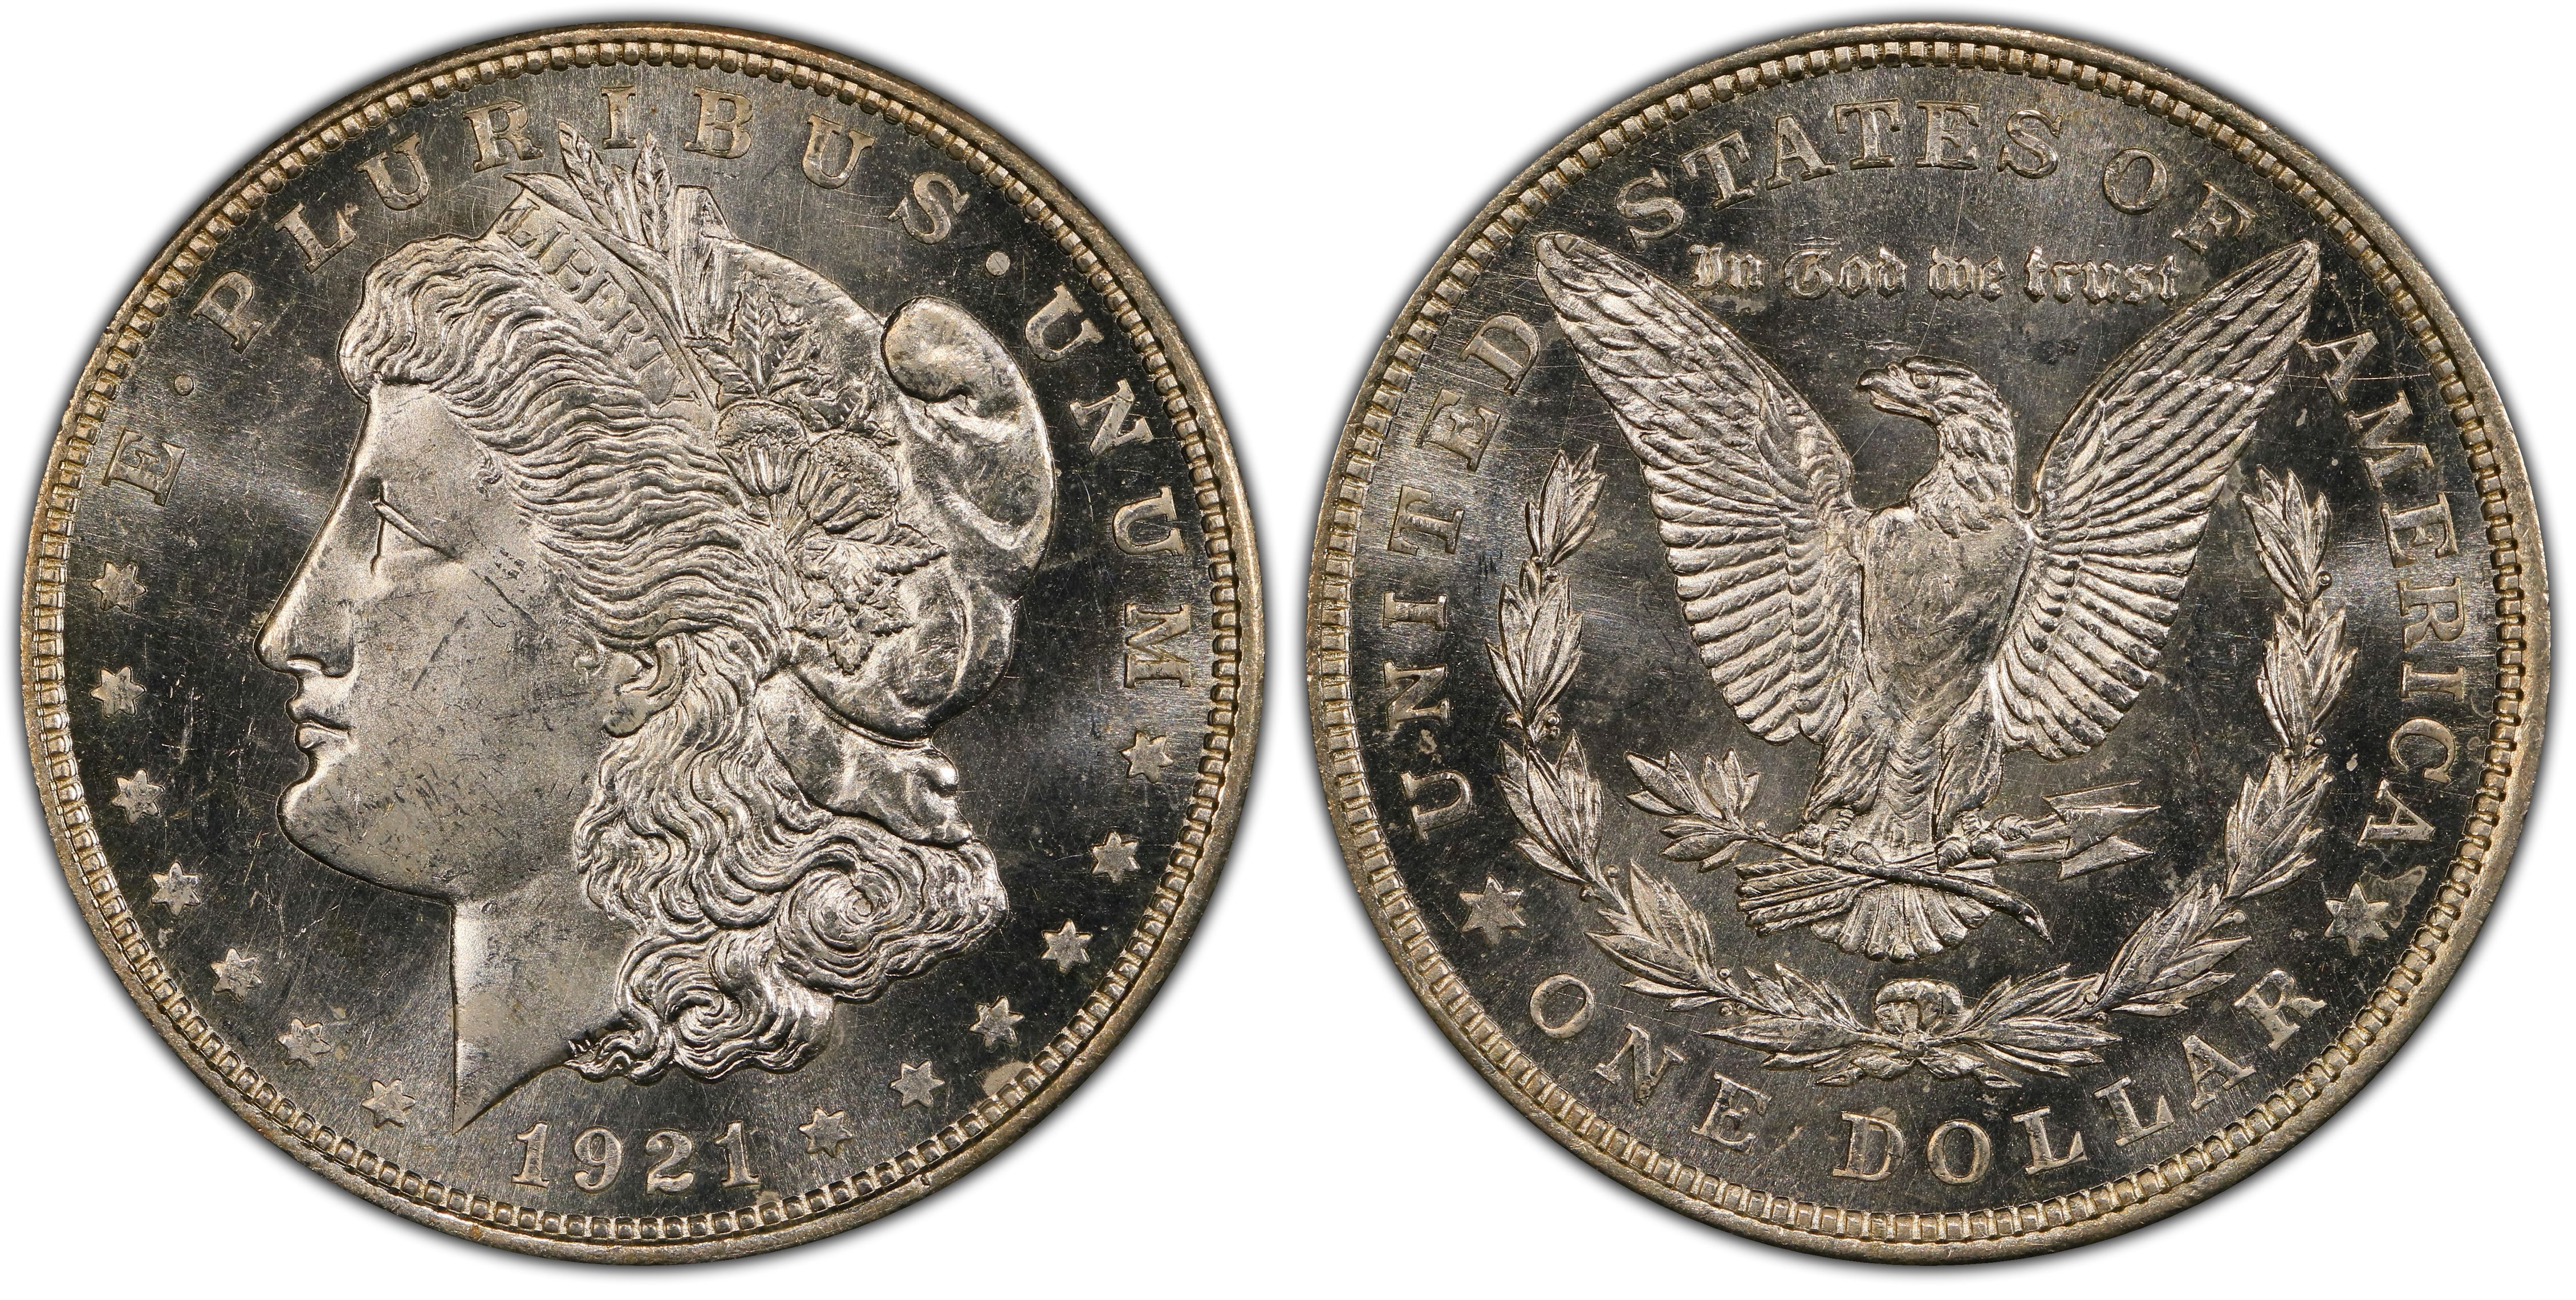 1921 $1 Morgan, PL (Regular Strike) Morgan Dollar - PCGS CoinFacts